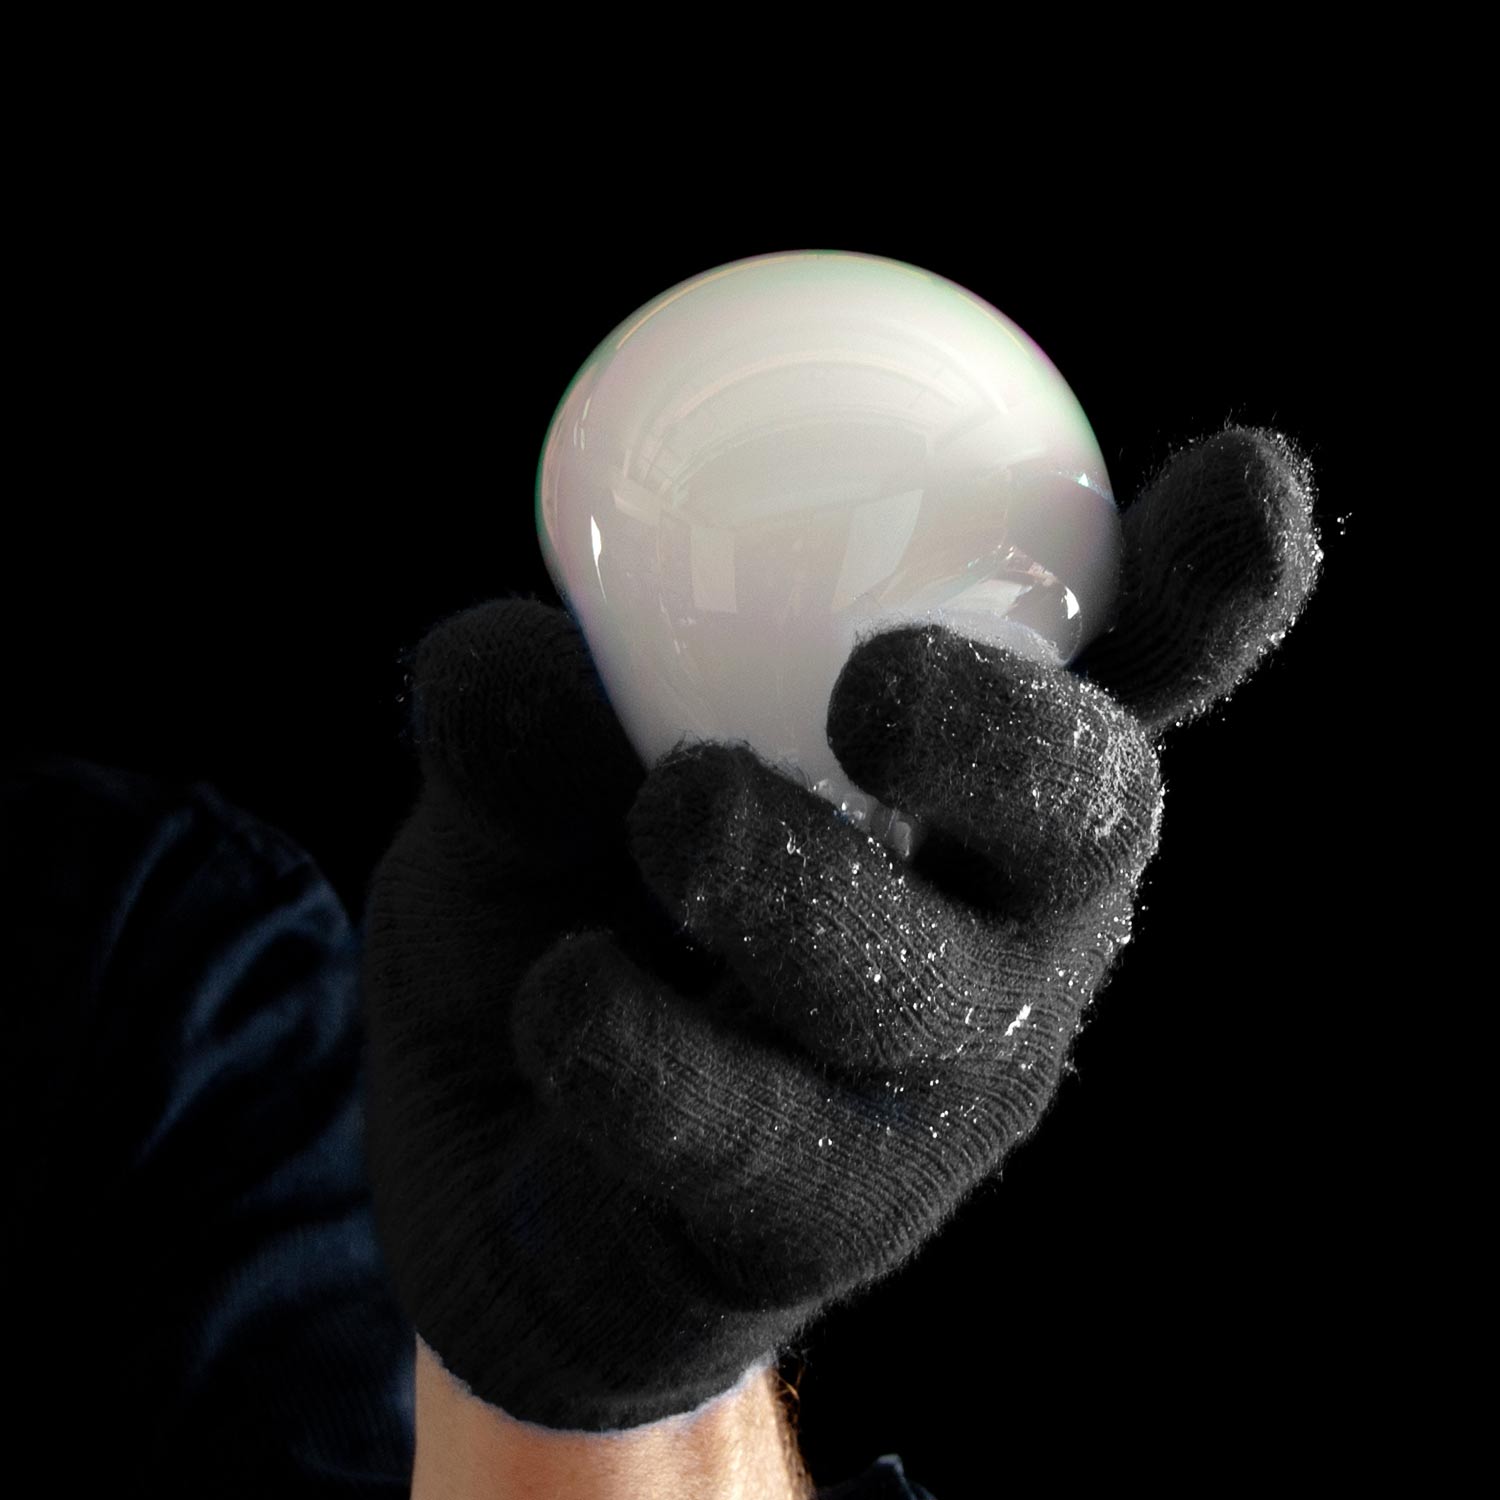 Bubble Gloves by Steve Spangler Science